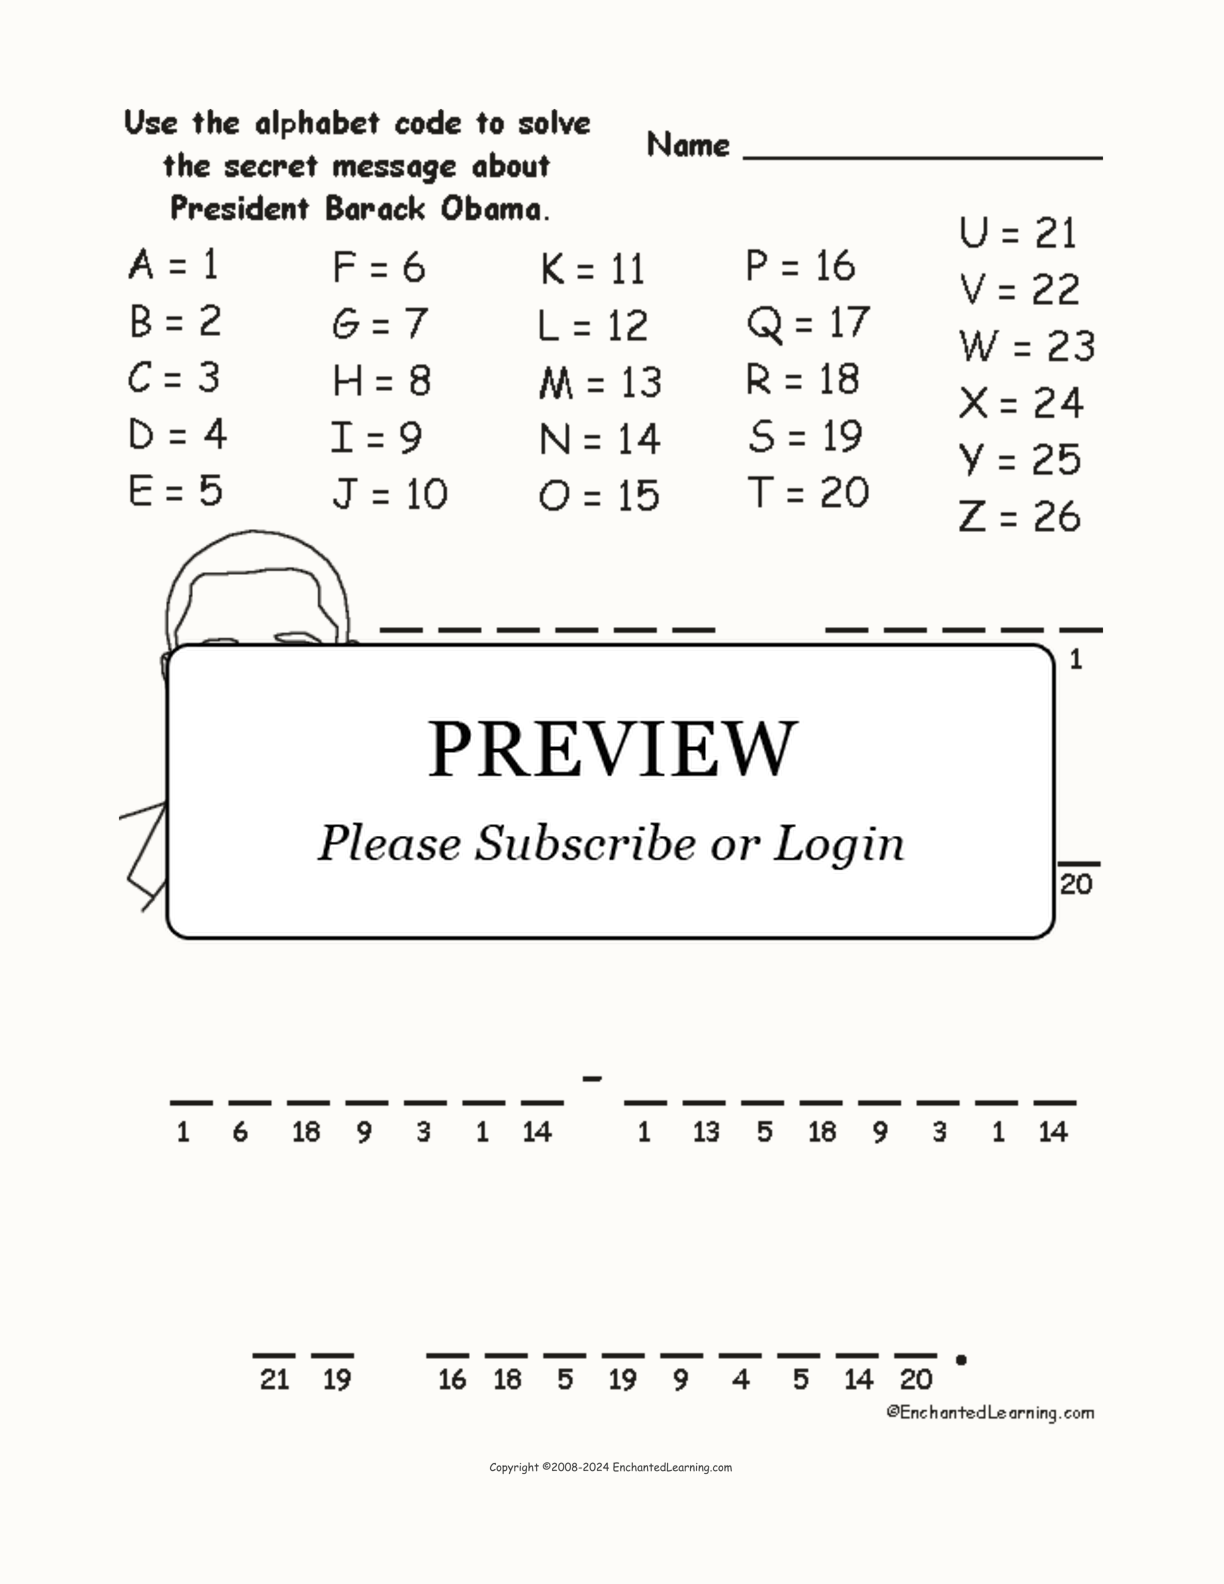 President Barack Obama Alphabet Code interactive worksheet page 1